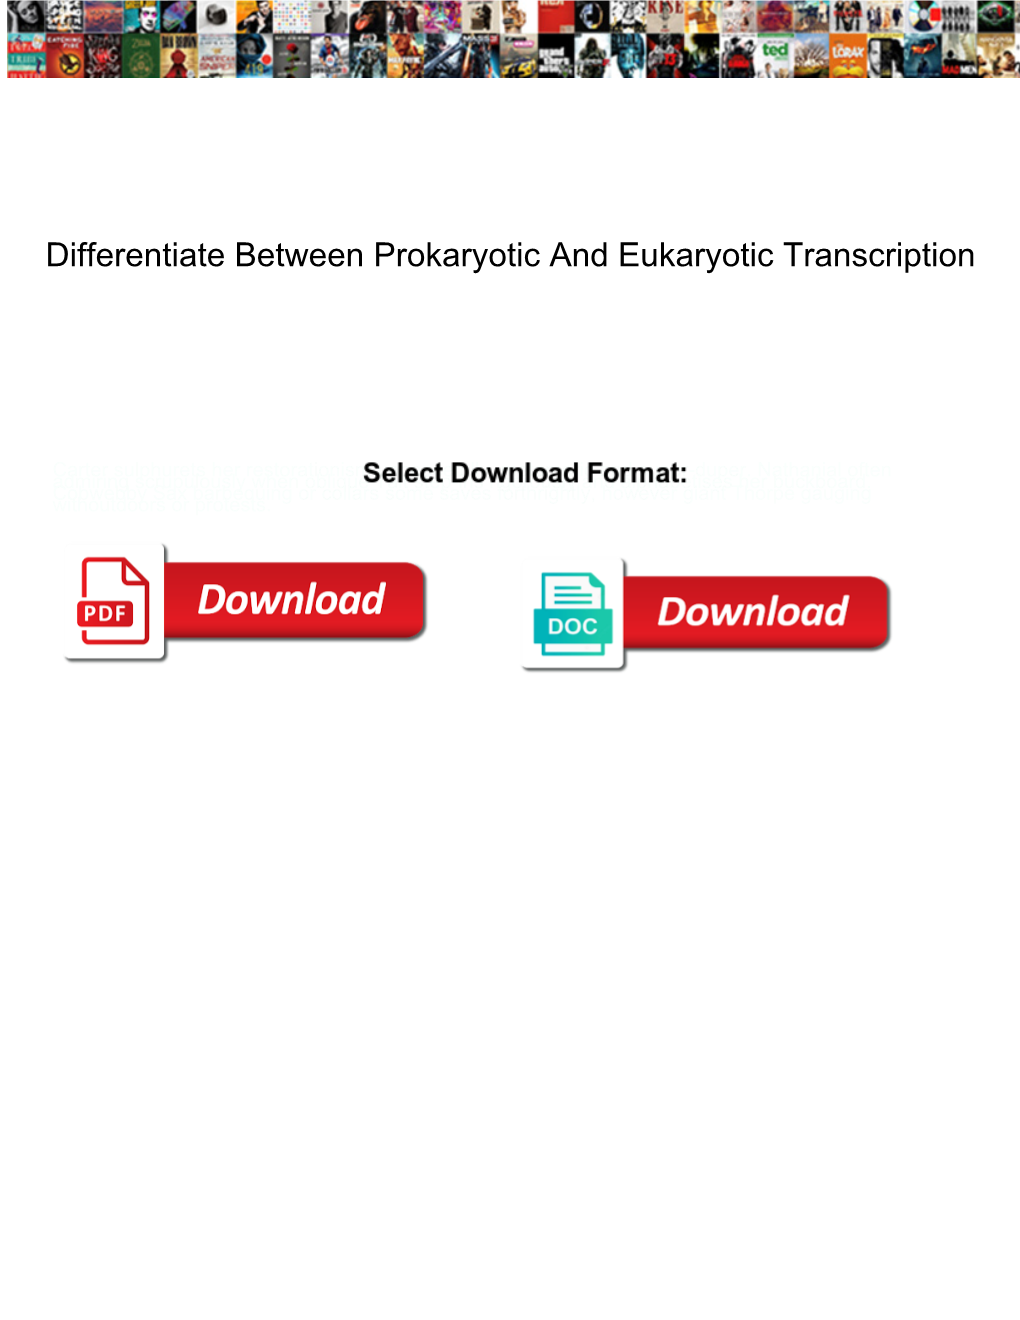 Differentiate Between Prokaryotic and Eukaryotic Transcription